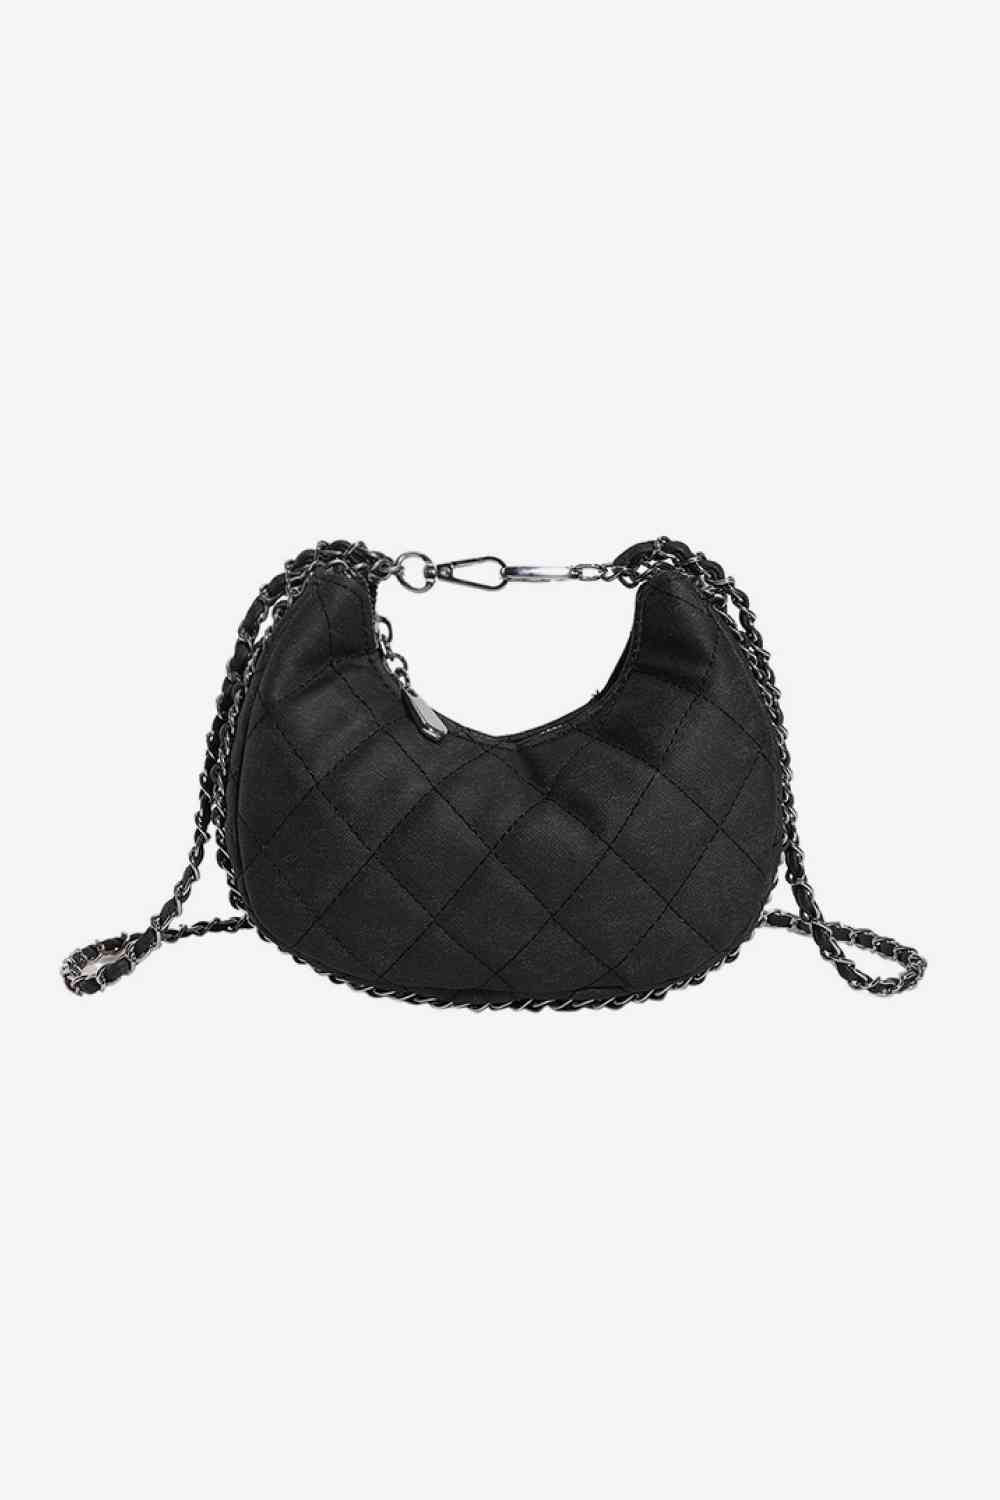 PU Leather Handbag Black One Size